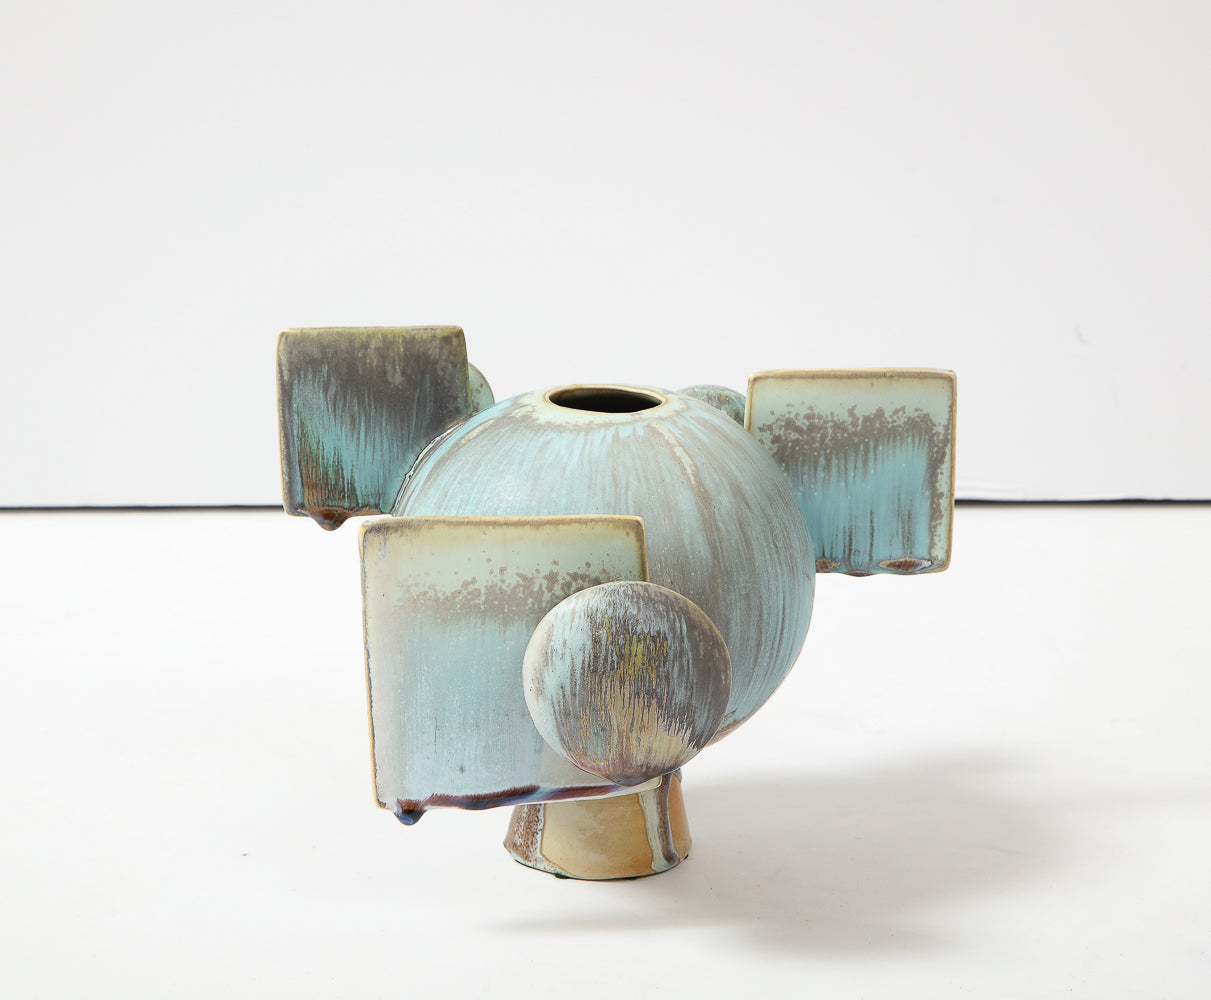 Shift Porcelain Vase #1, by Robbie Heidinger